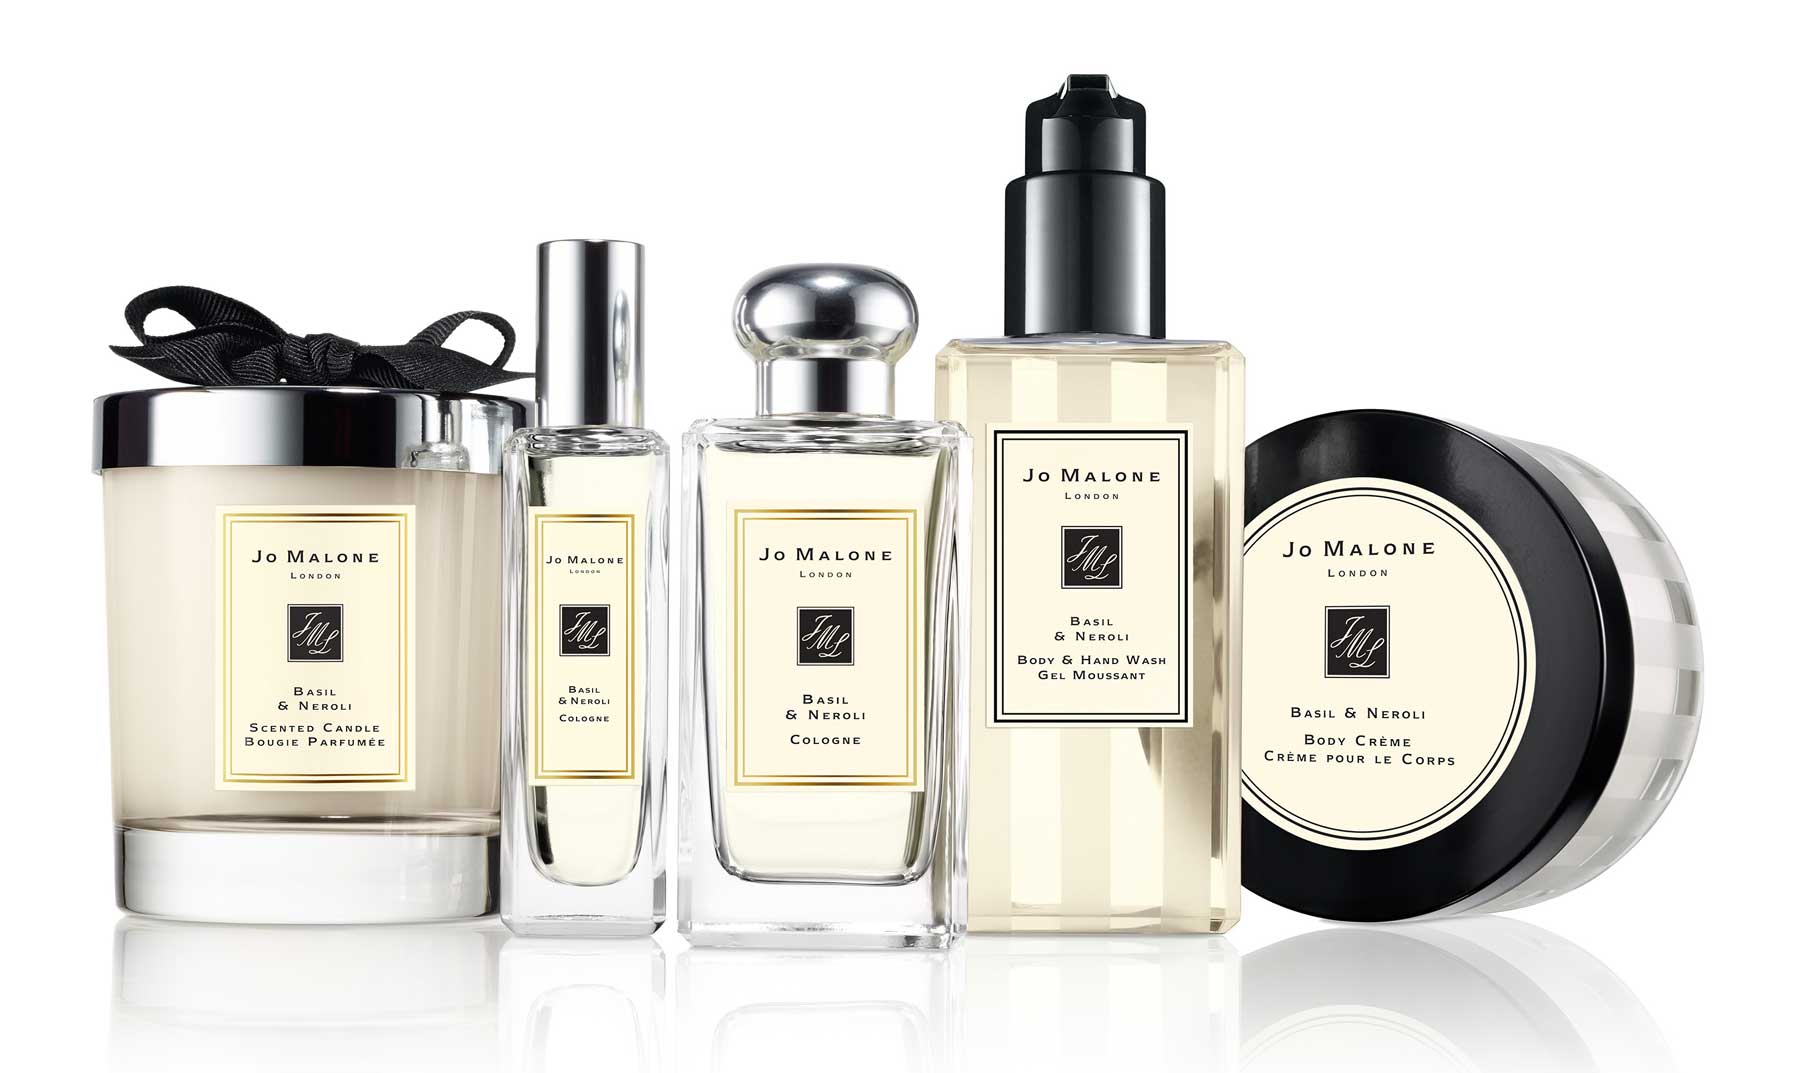 Basil & Neroli Jo Malone London perfume - a new fragrance for women and